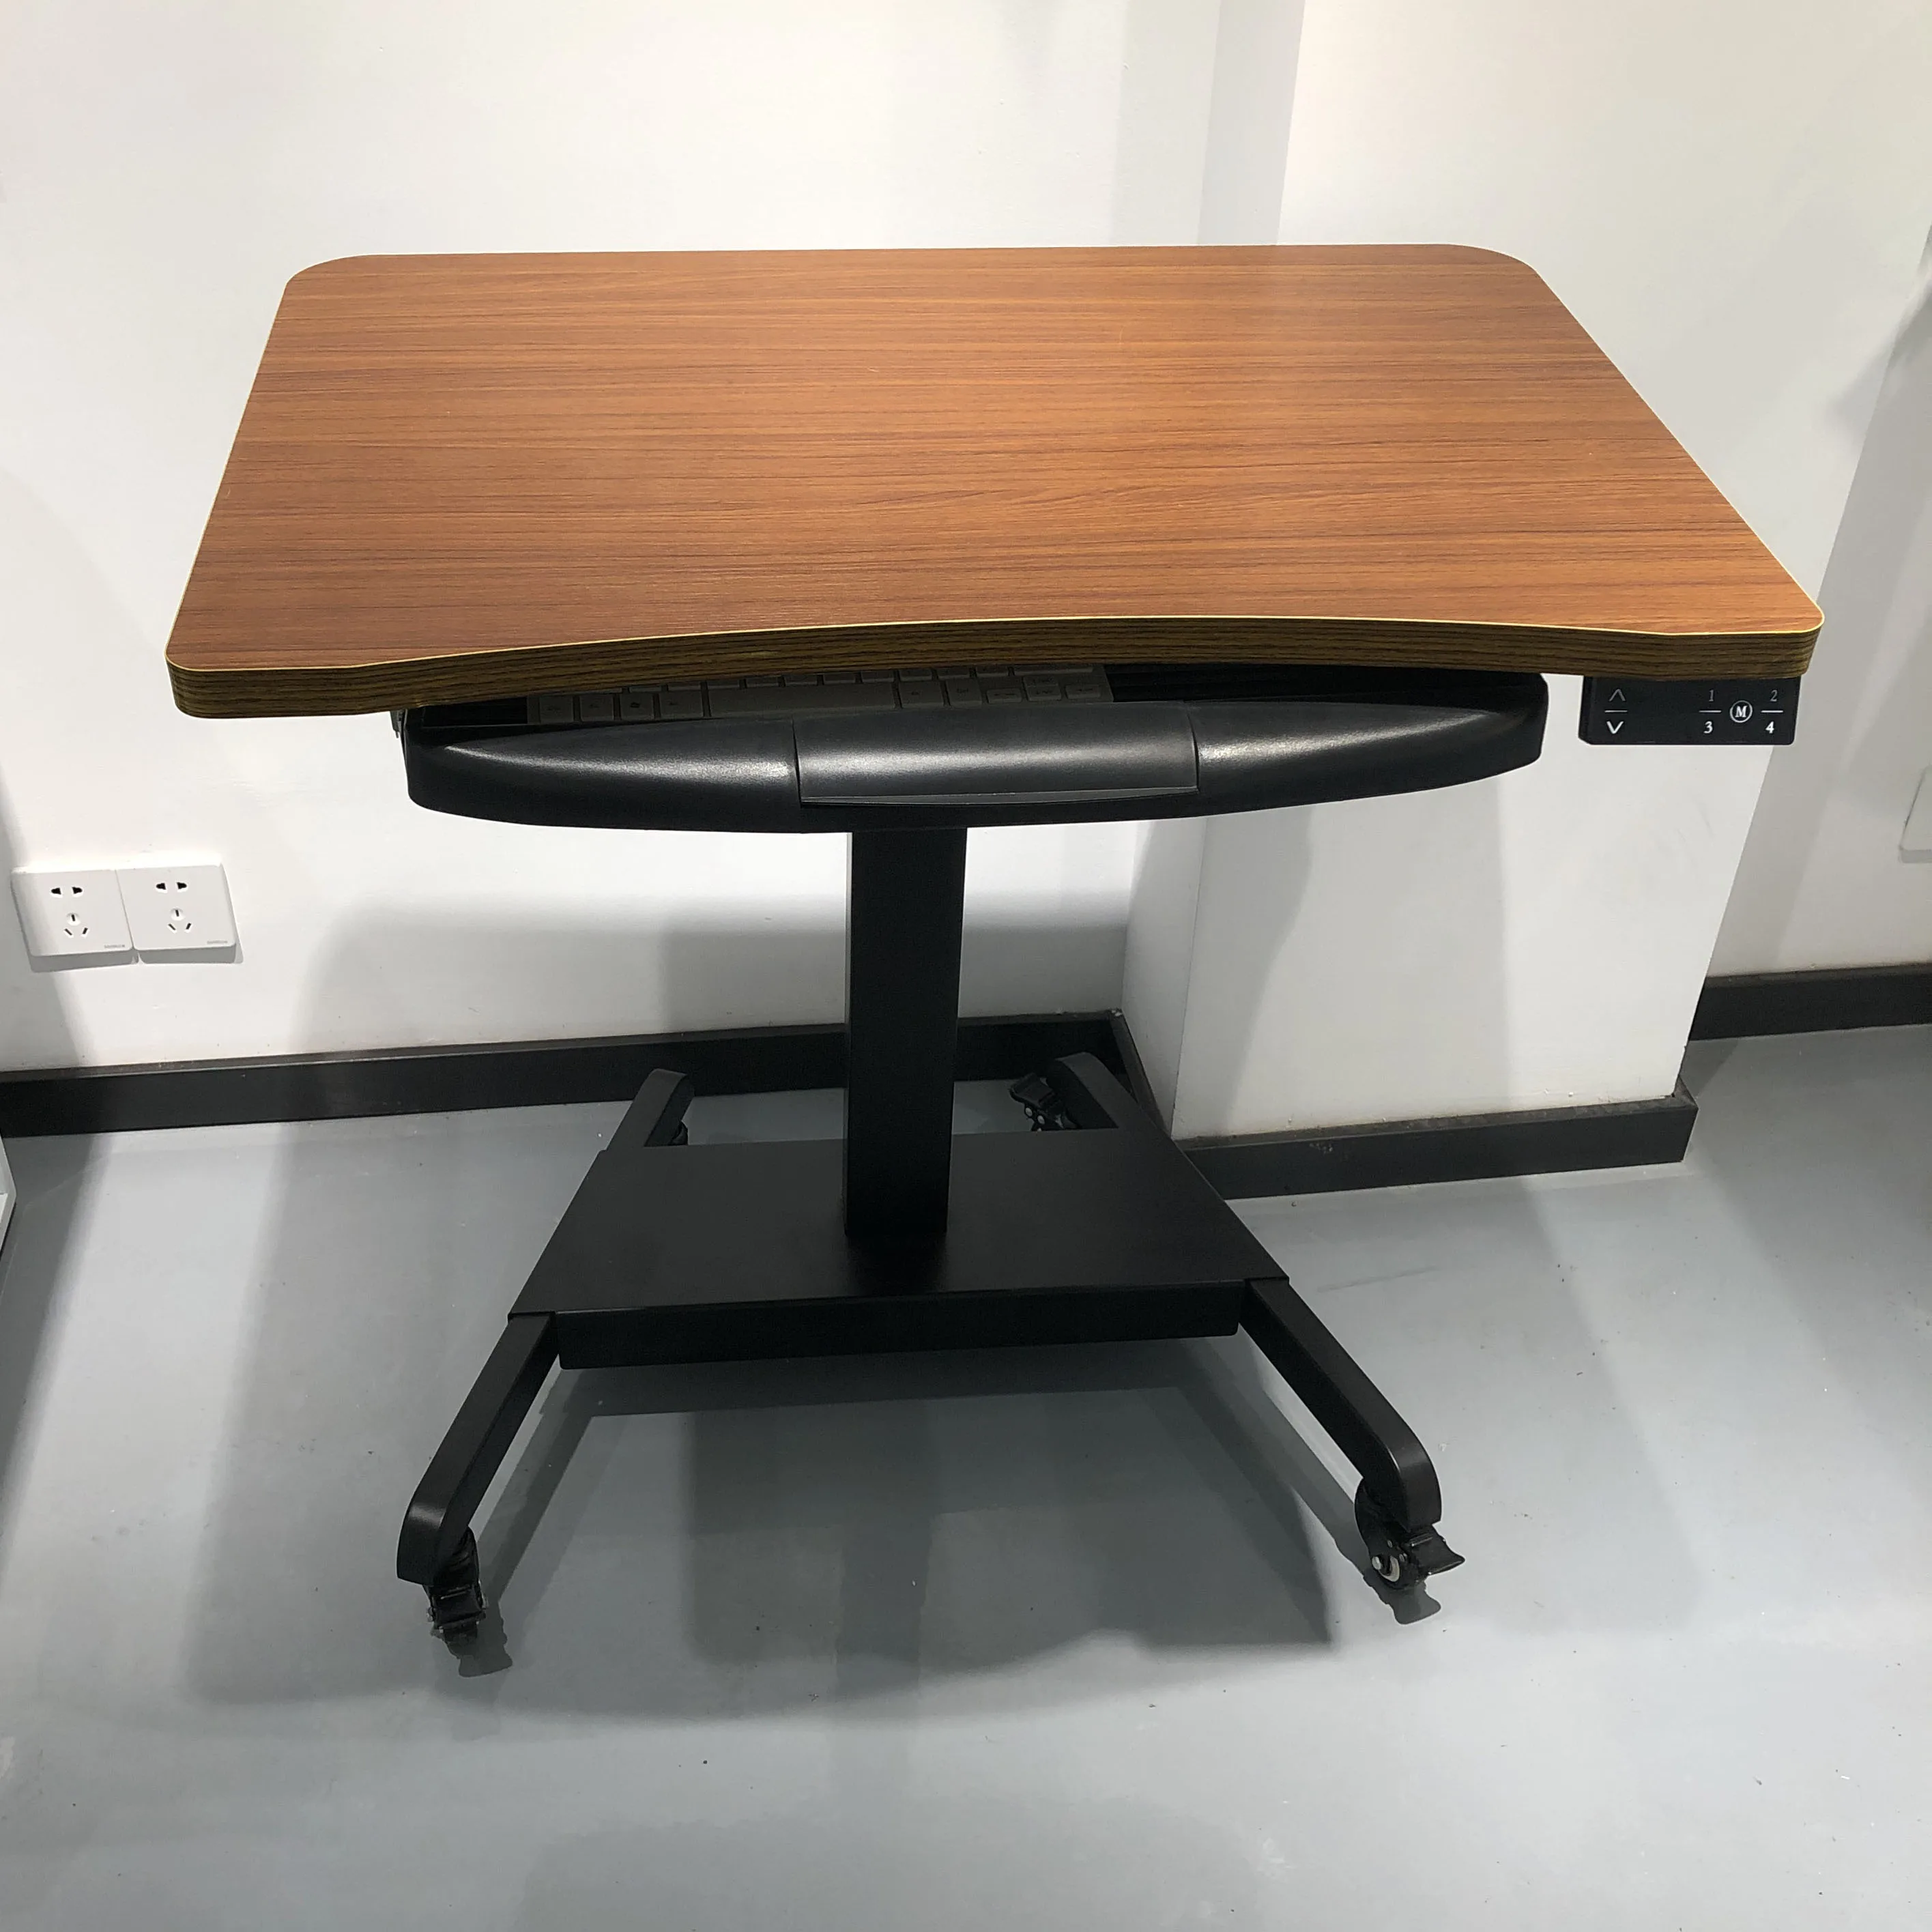 Stand Up Desk Store Electric Height Adjustable desk Single leg Rolling Mobile Standing Desk